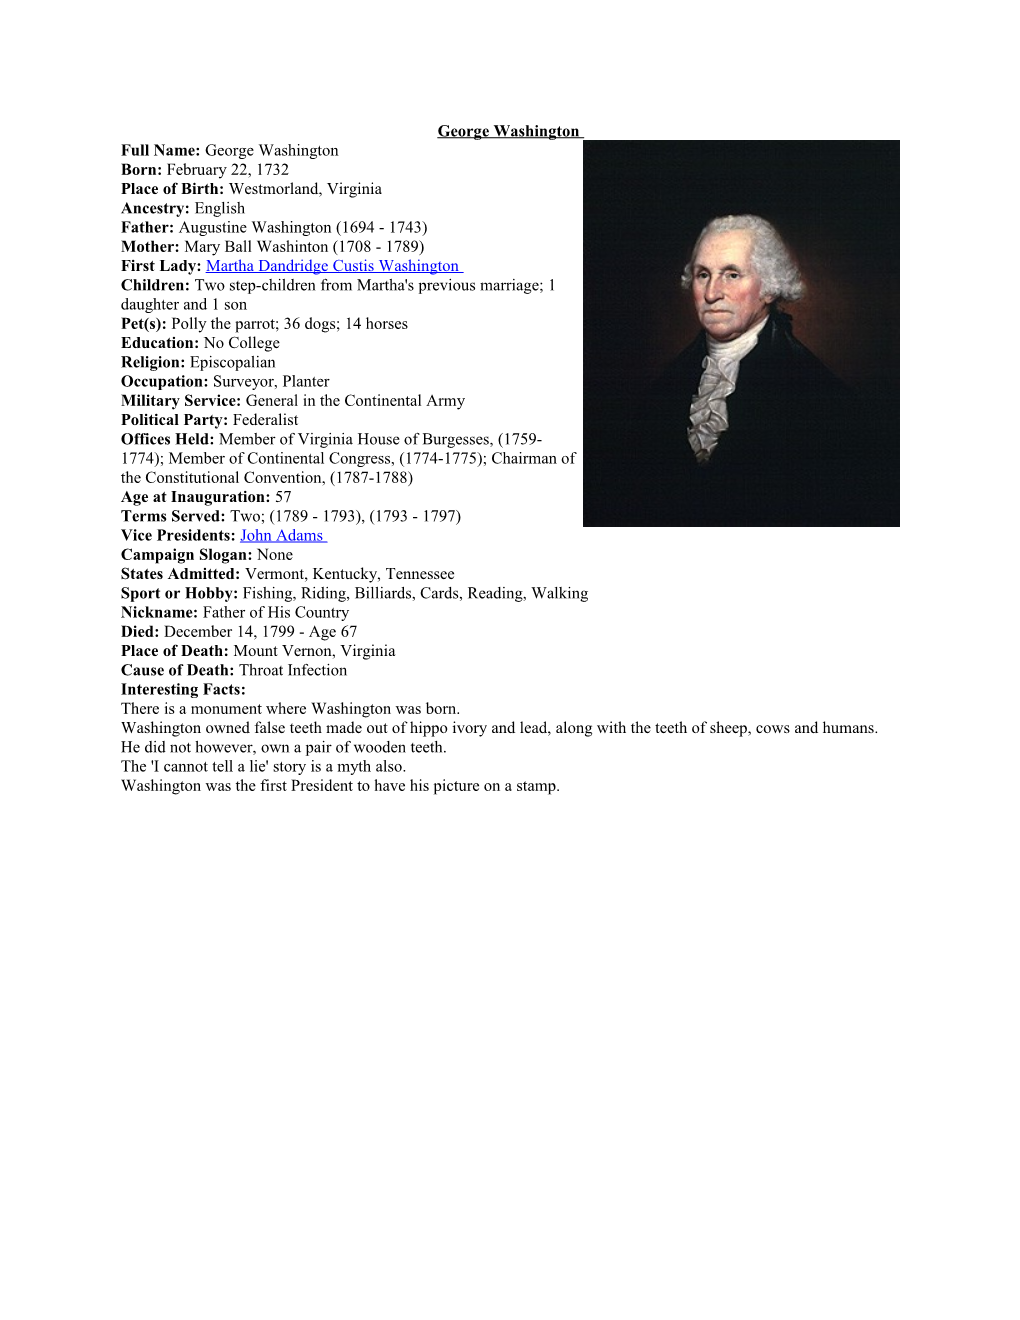 George Washington s2